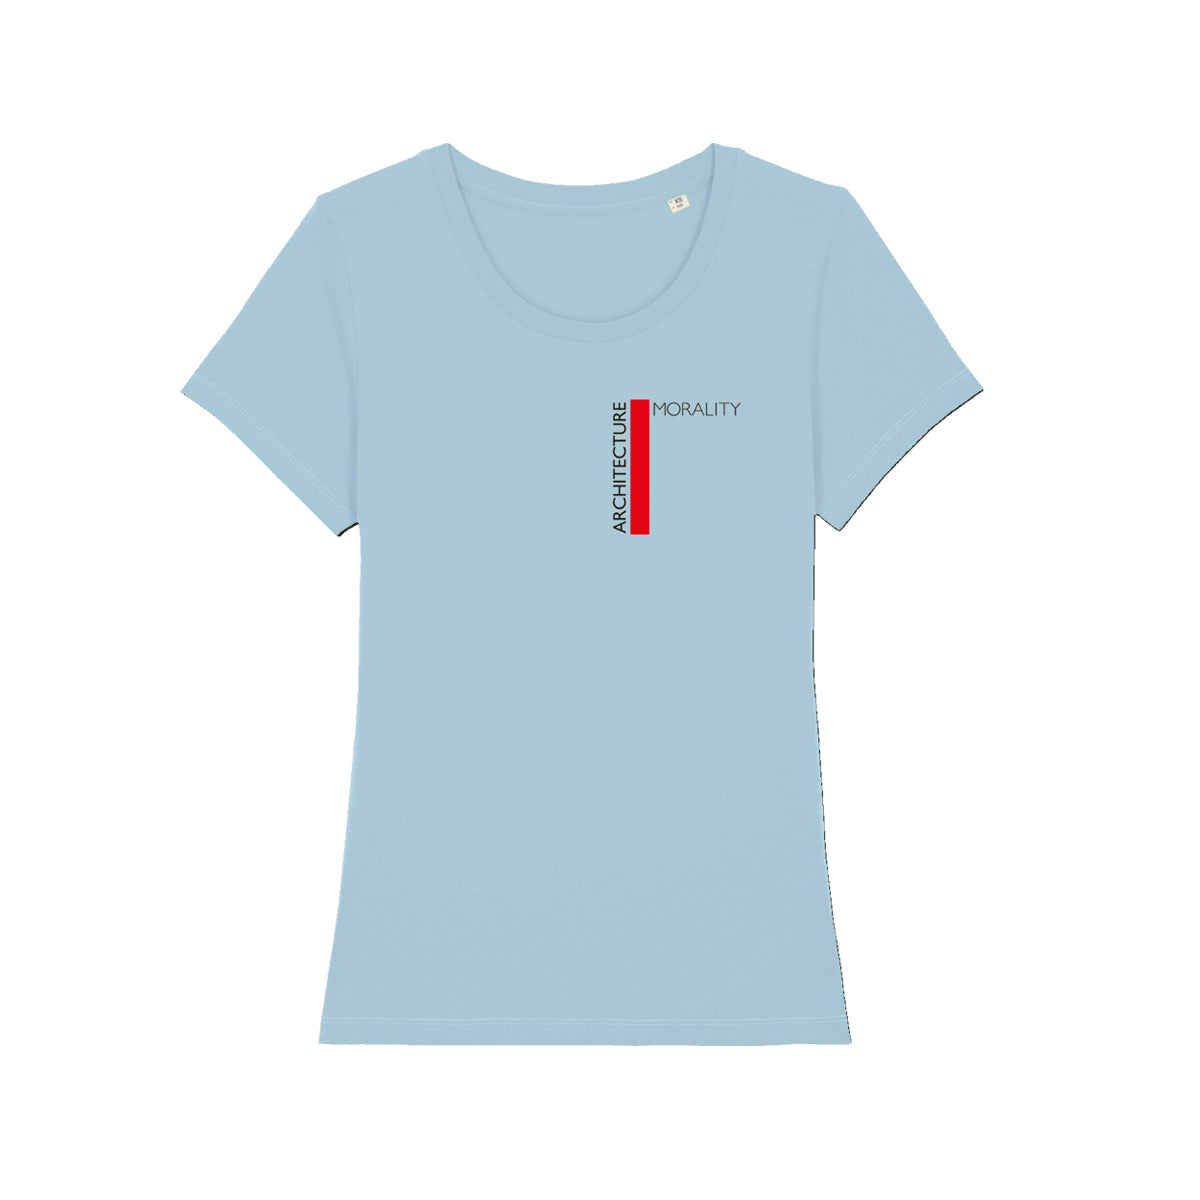 Architecture & Morality - T-shirt (Women's)